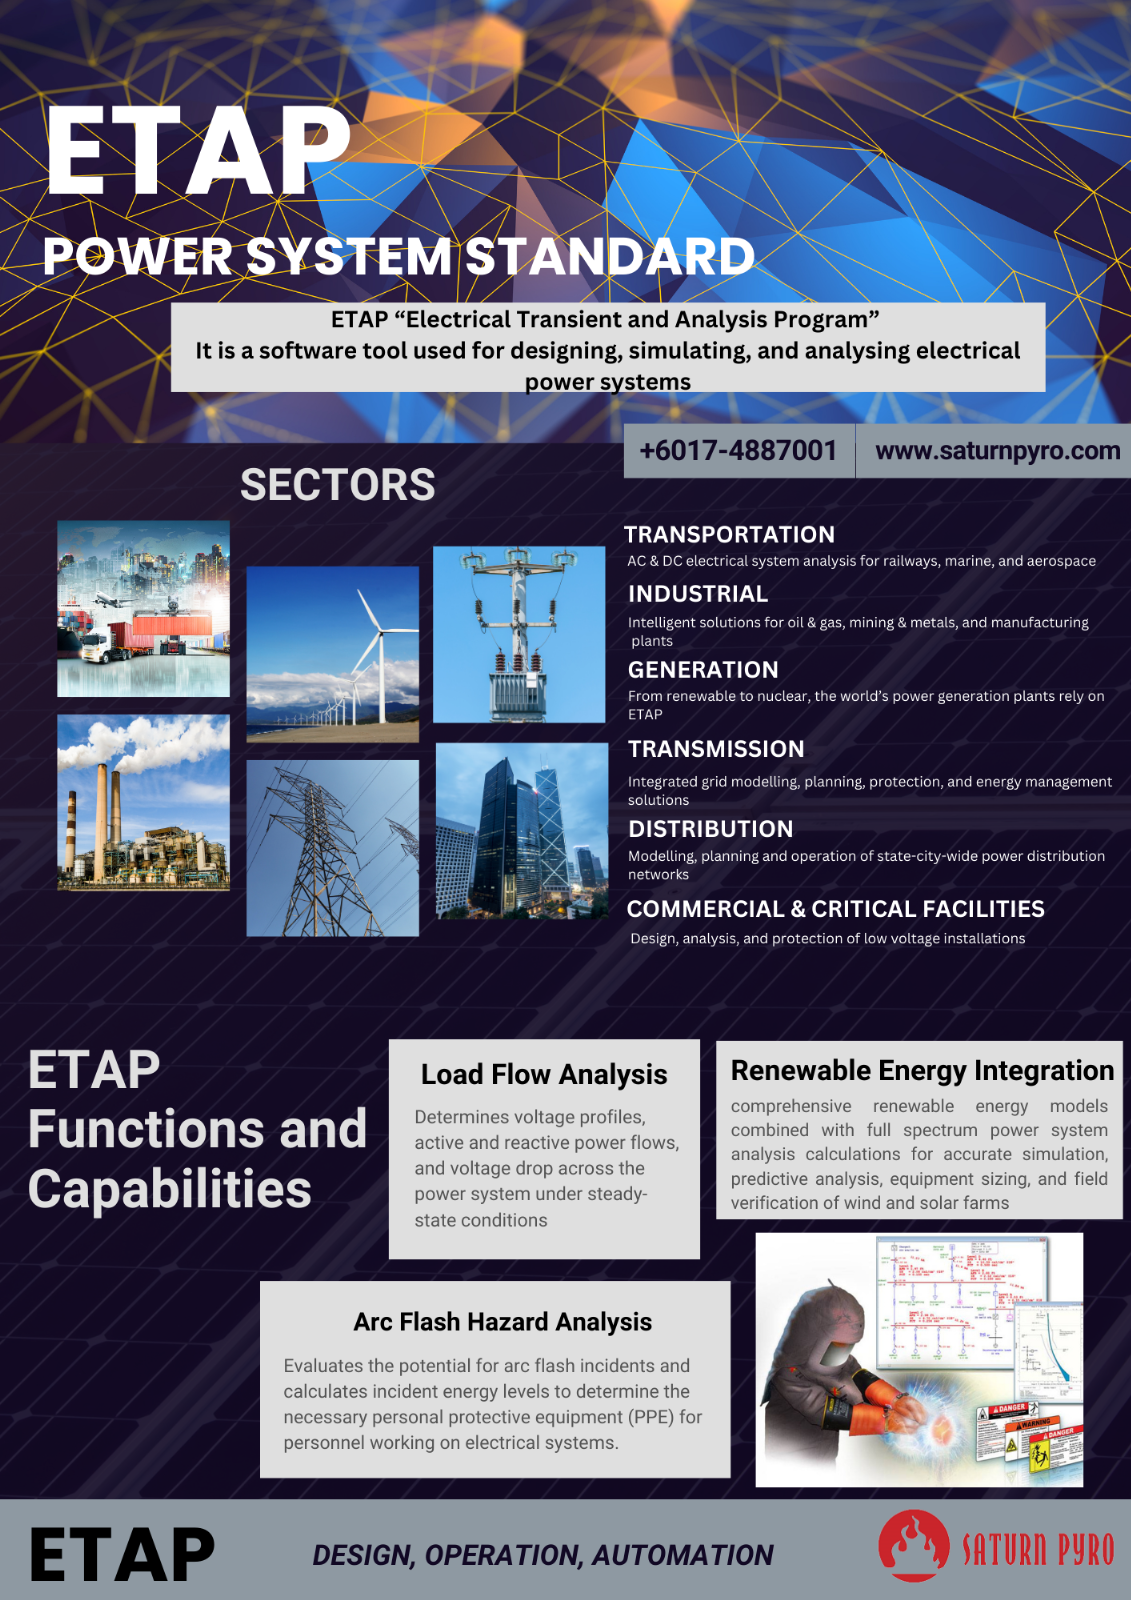 ETAP POWER SYSTEM STANDARD